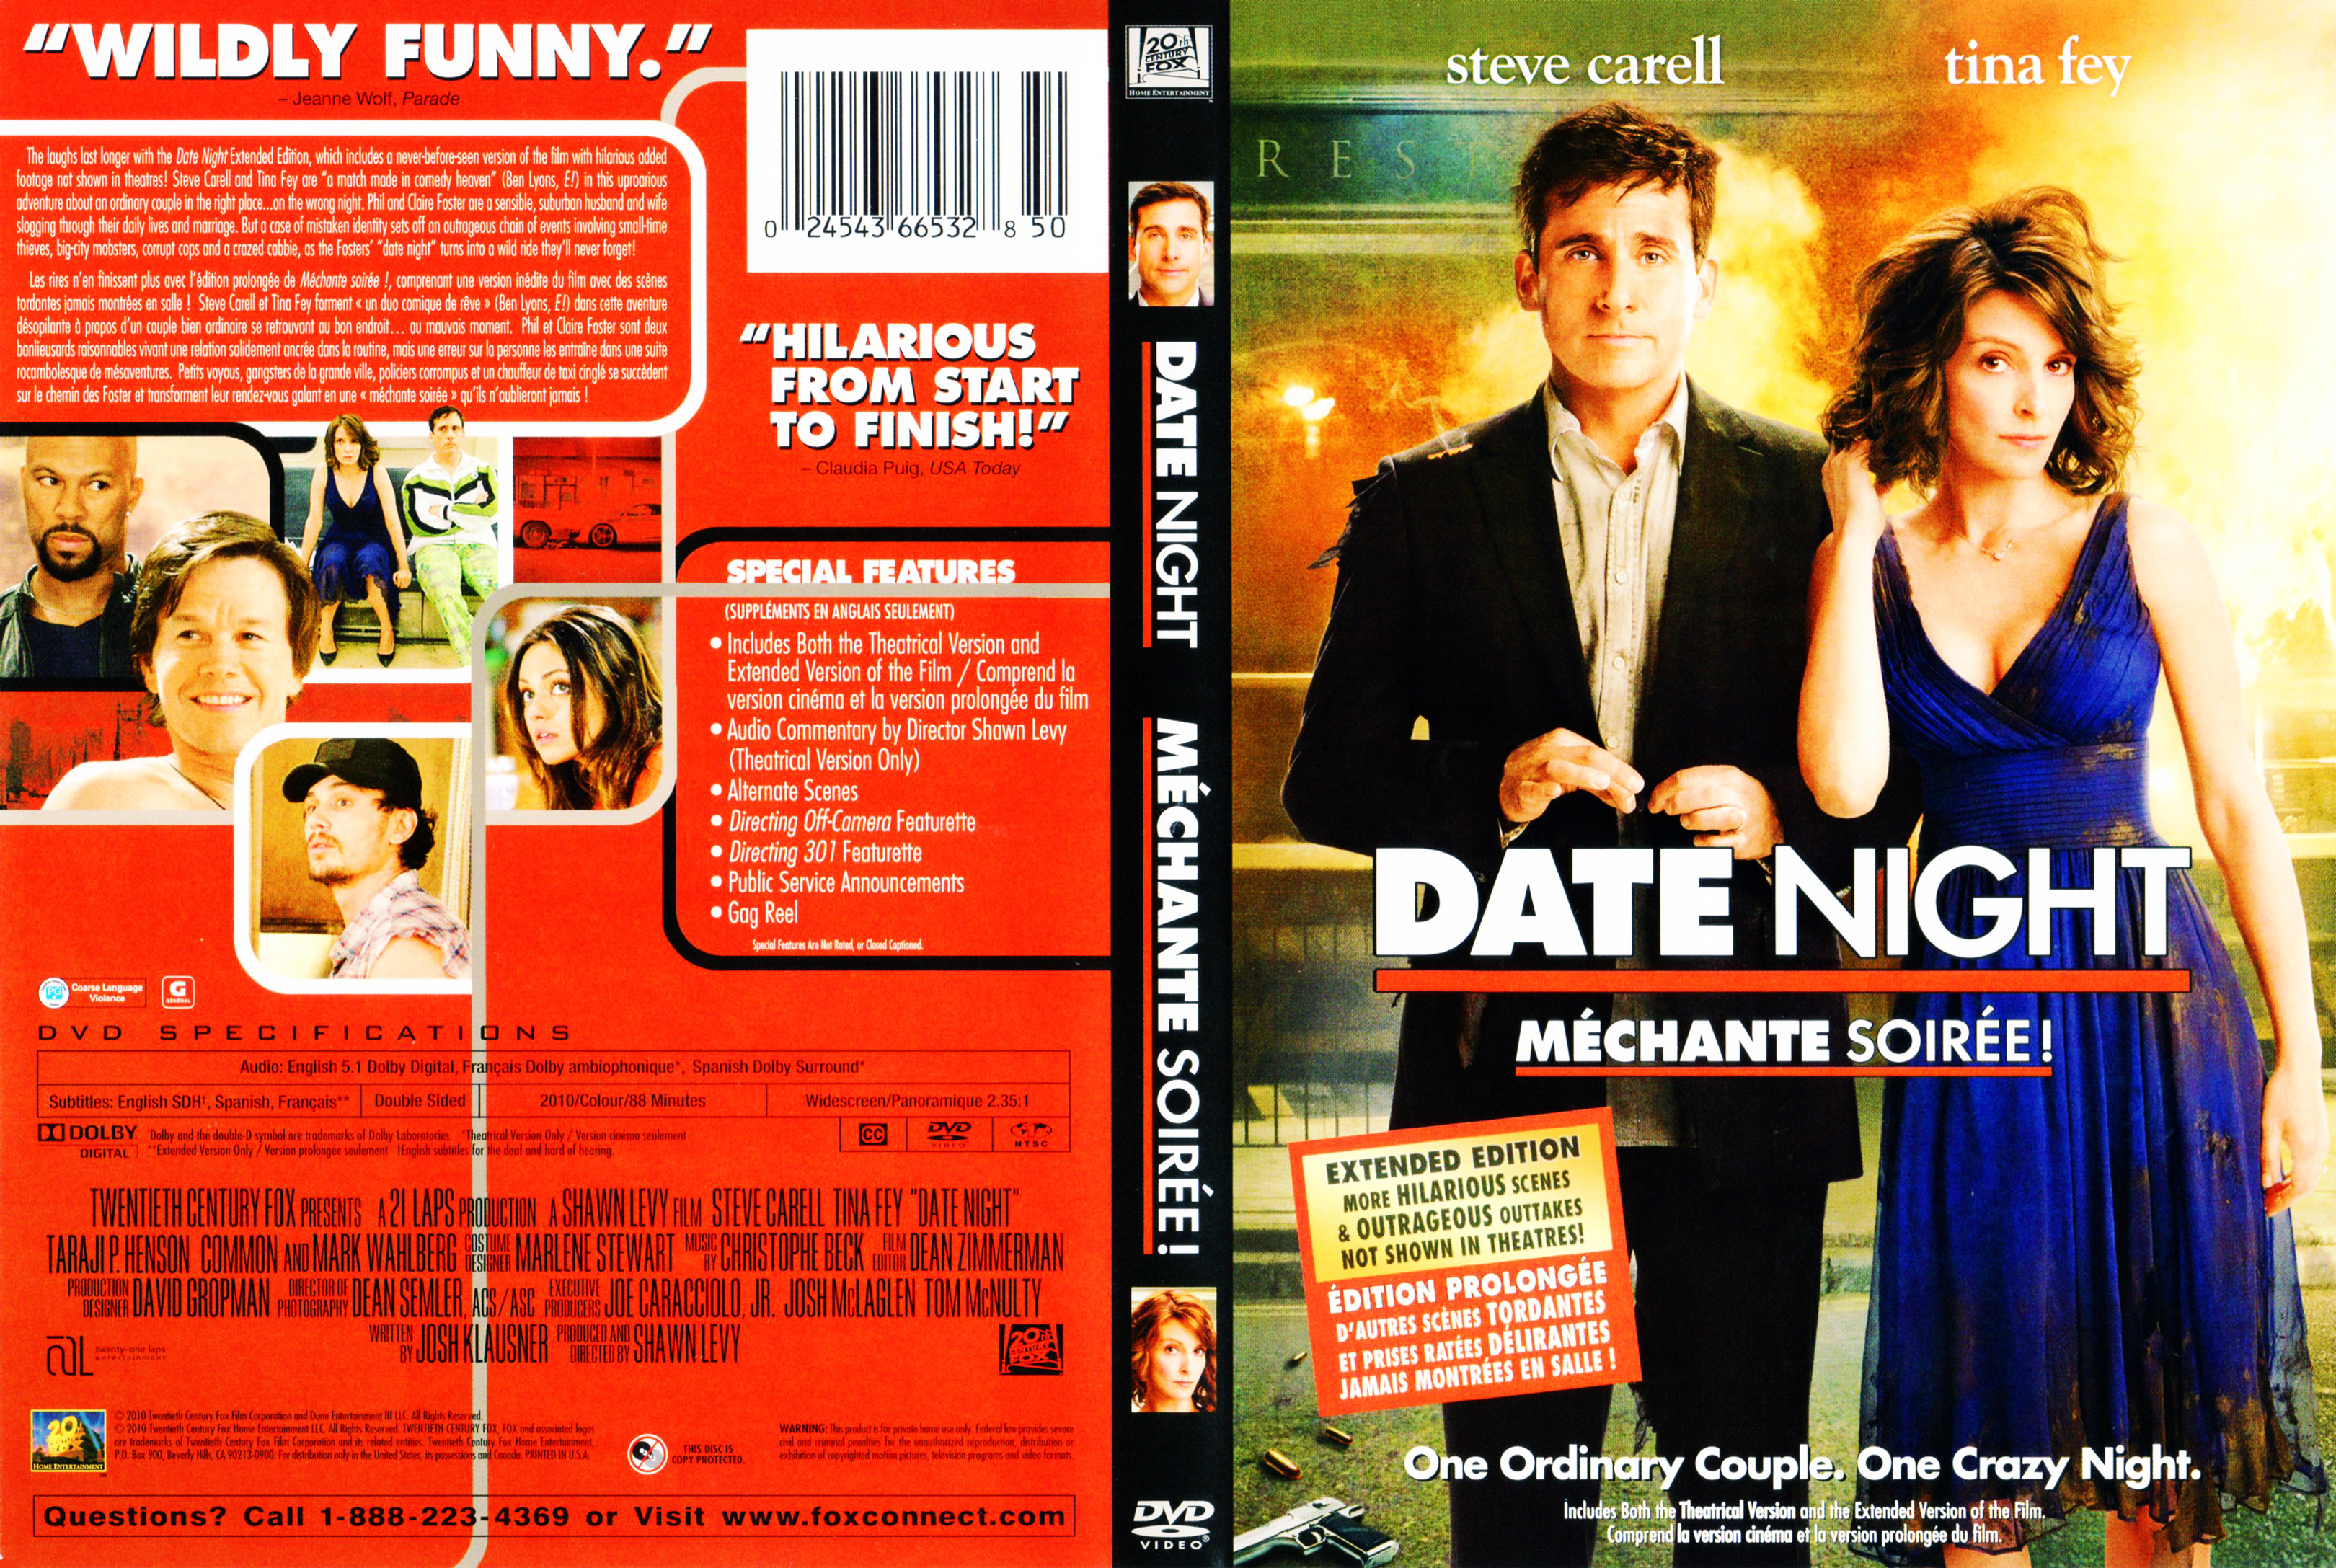 Jaquette DVD Date Night - Mchante soire (Canadienne)